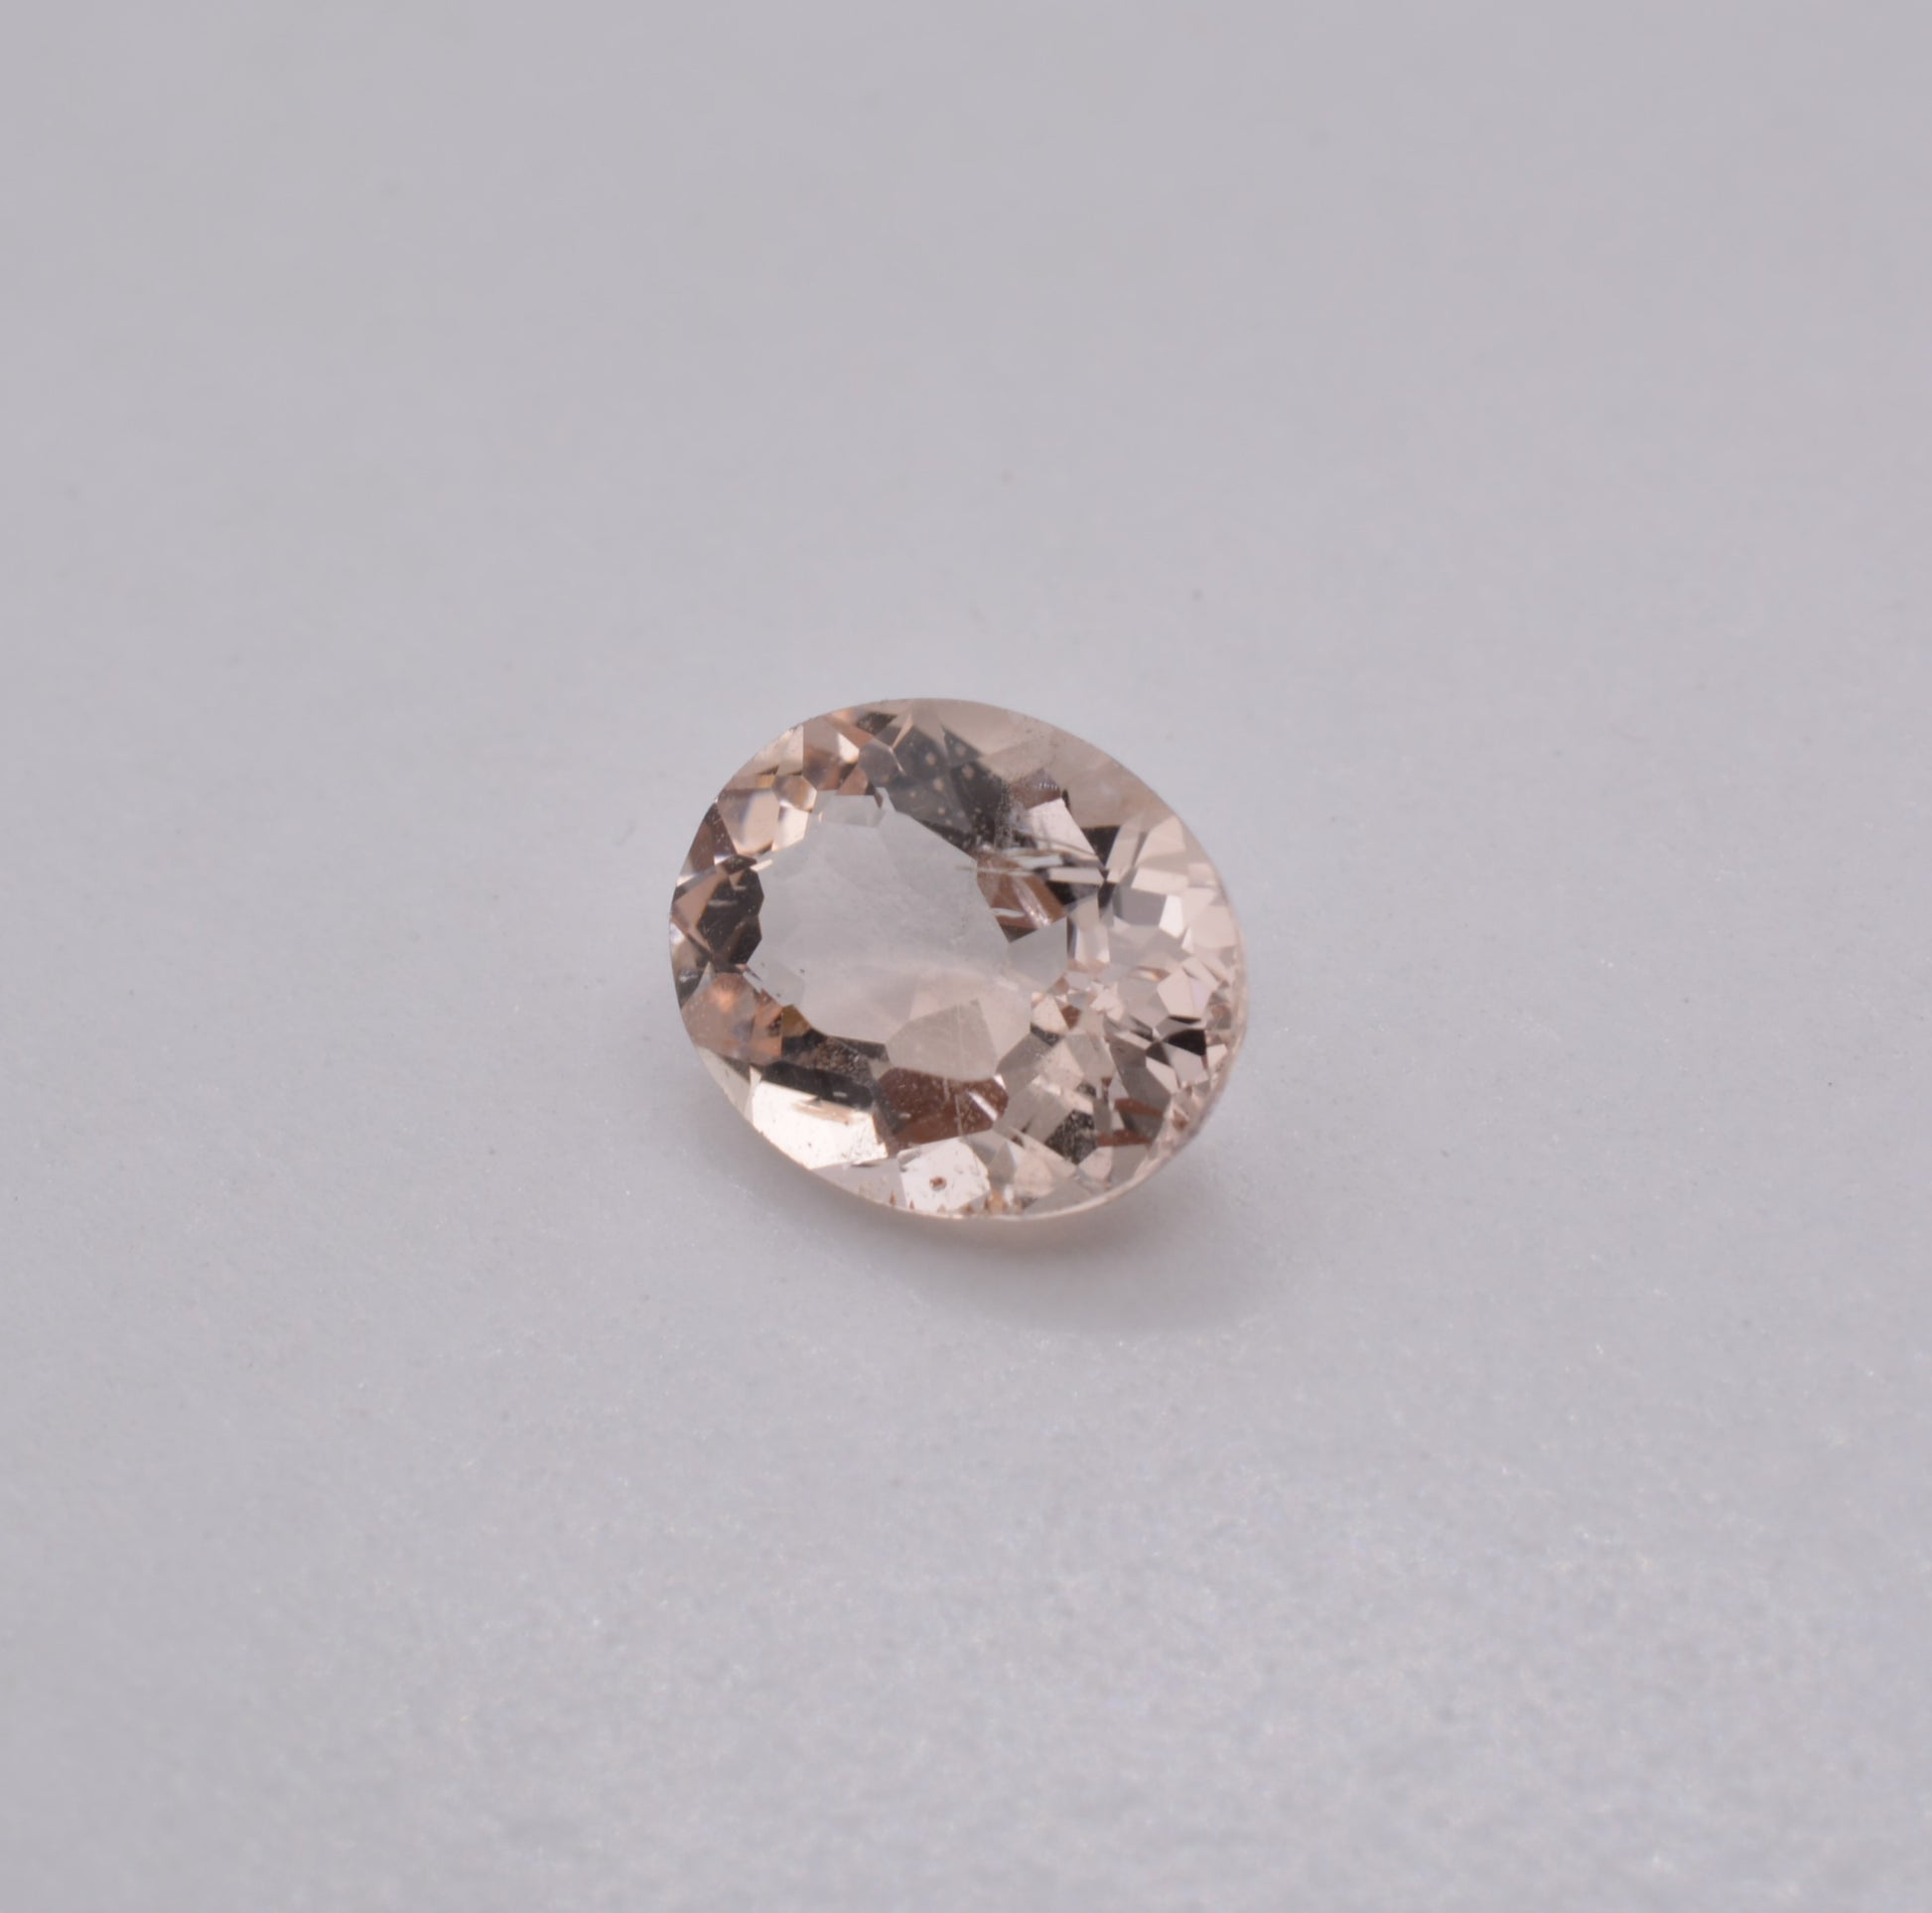 Morganite Ovale 1,70ct - pierre précieuse - gemme